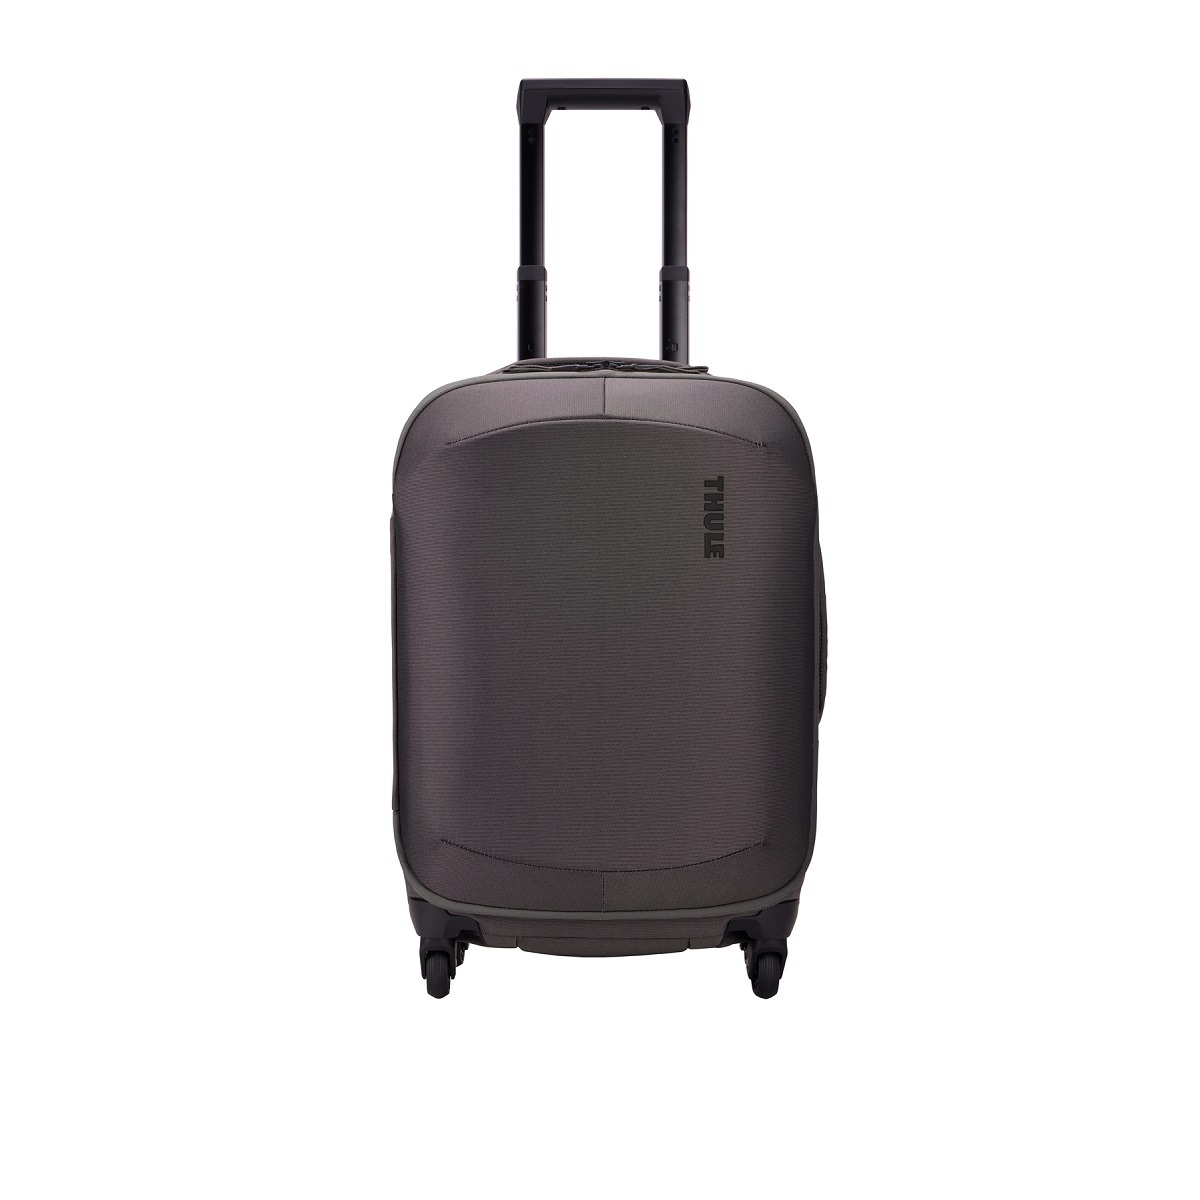 Thule Subterra 2 kofer s kotačima 55cm/35L CarryOn za unos ručne prtljage u zrakoplov - sivi